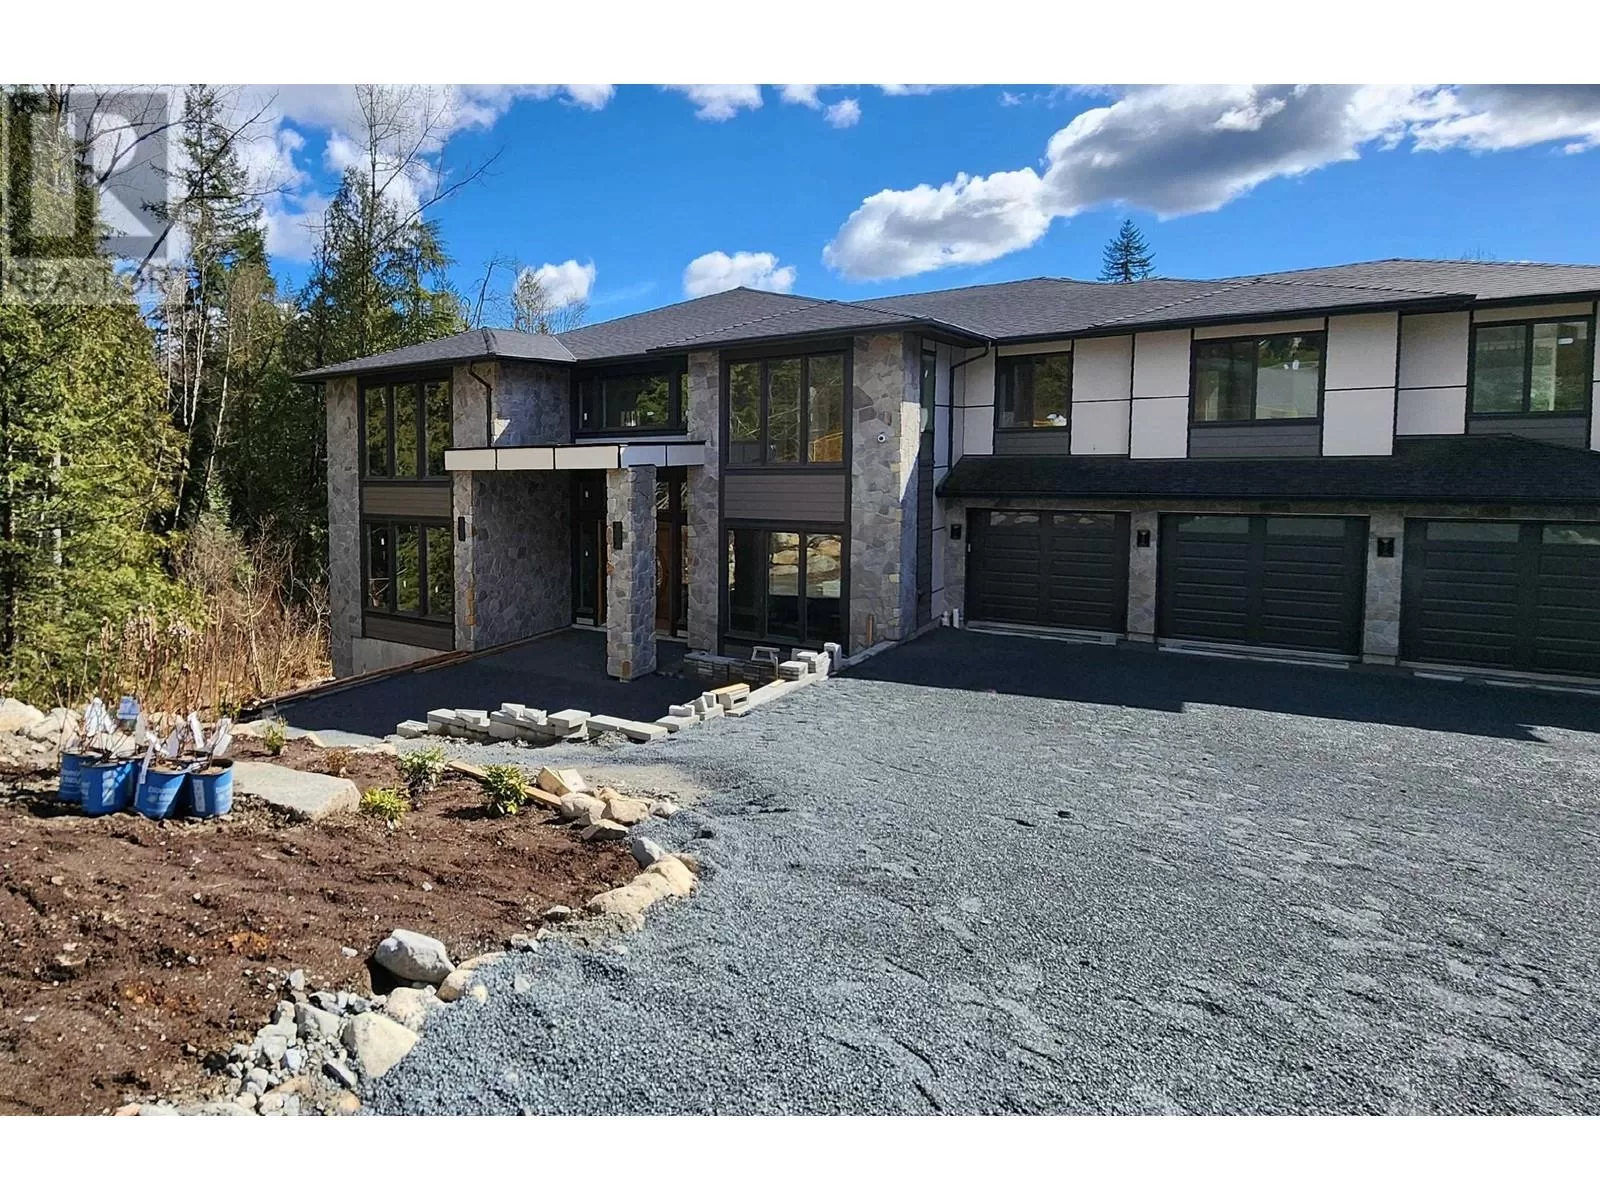 House for rent: 12230 267 Street, Maple Ridge, British Columbia V2W 0E2